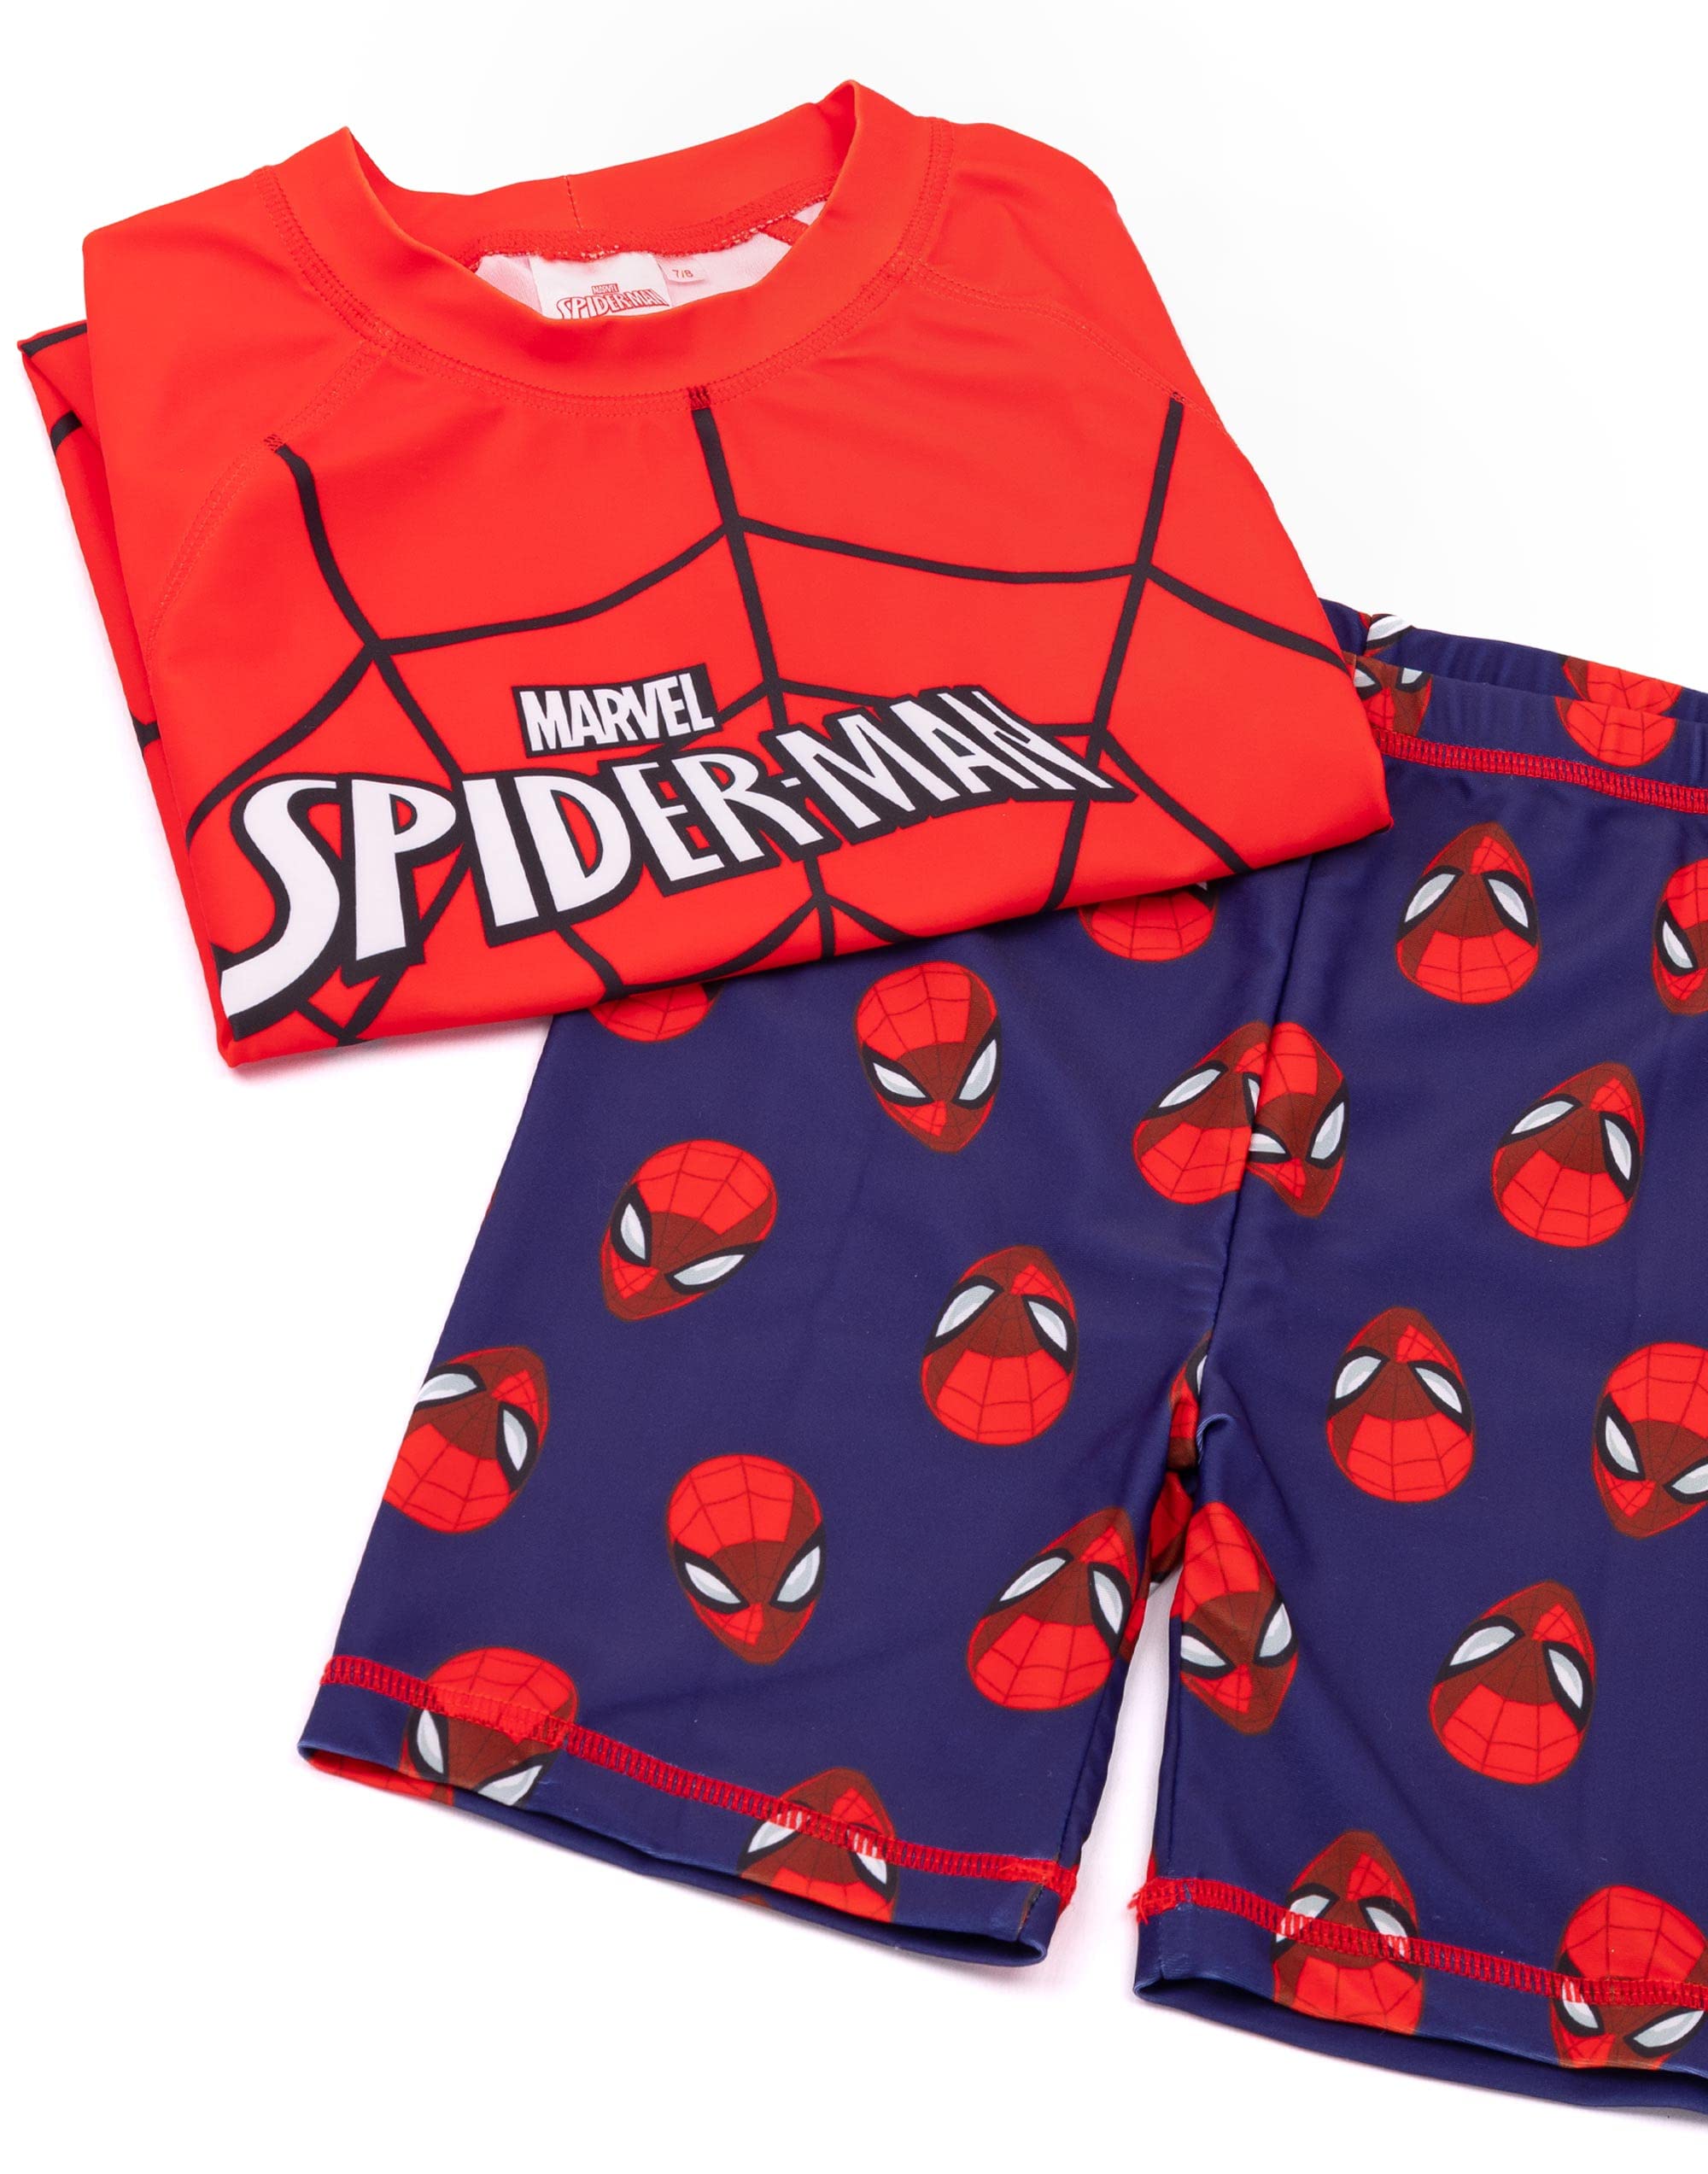 Marvel Spider-Man Swimsuit Boys Kids Two Piece Top Shorts Swim Set